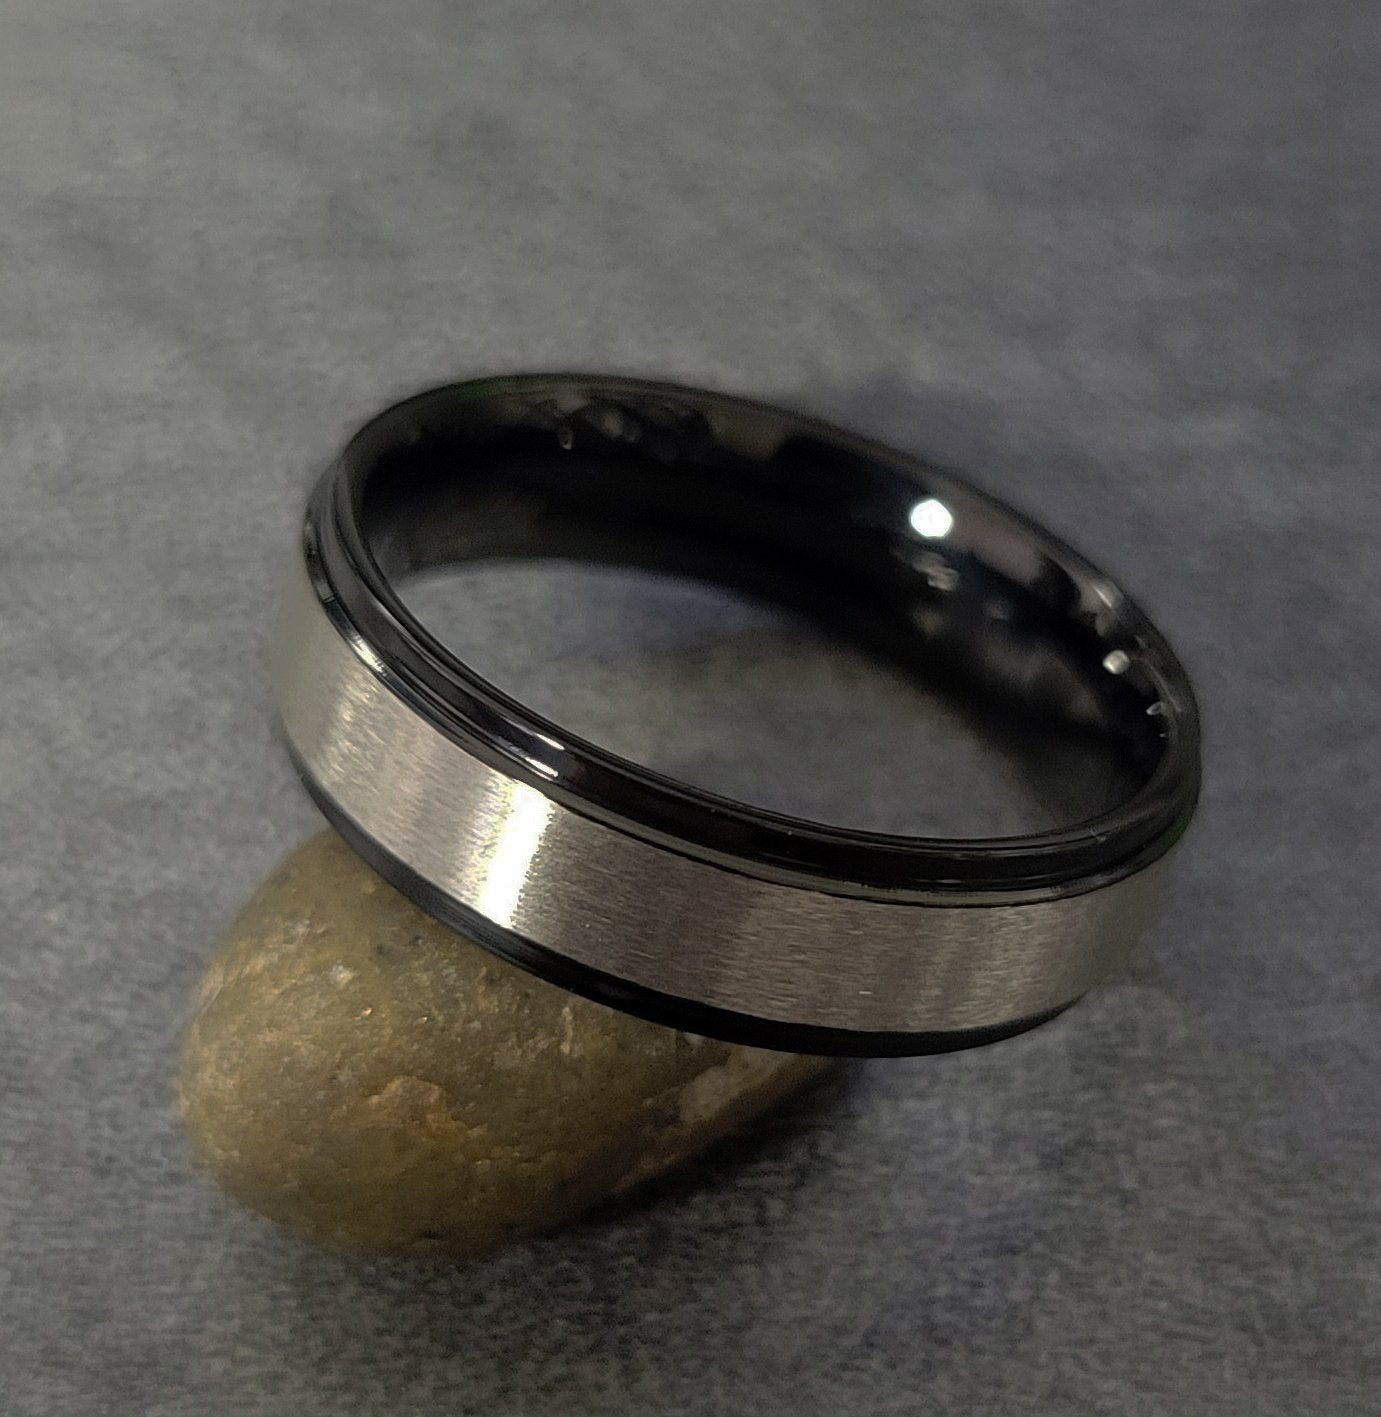 Think Engraved wedding Band Personalized Men's Brushed Steel Wedding Ring - Engraved Handwriting Wedding Ring